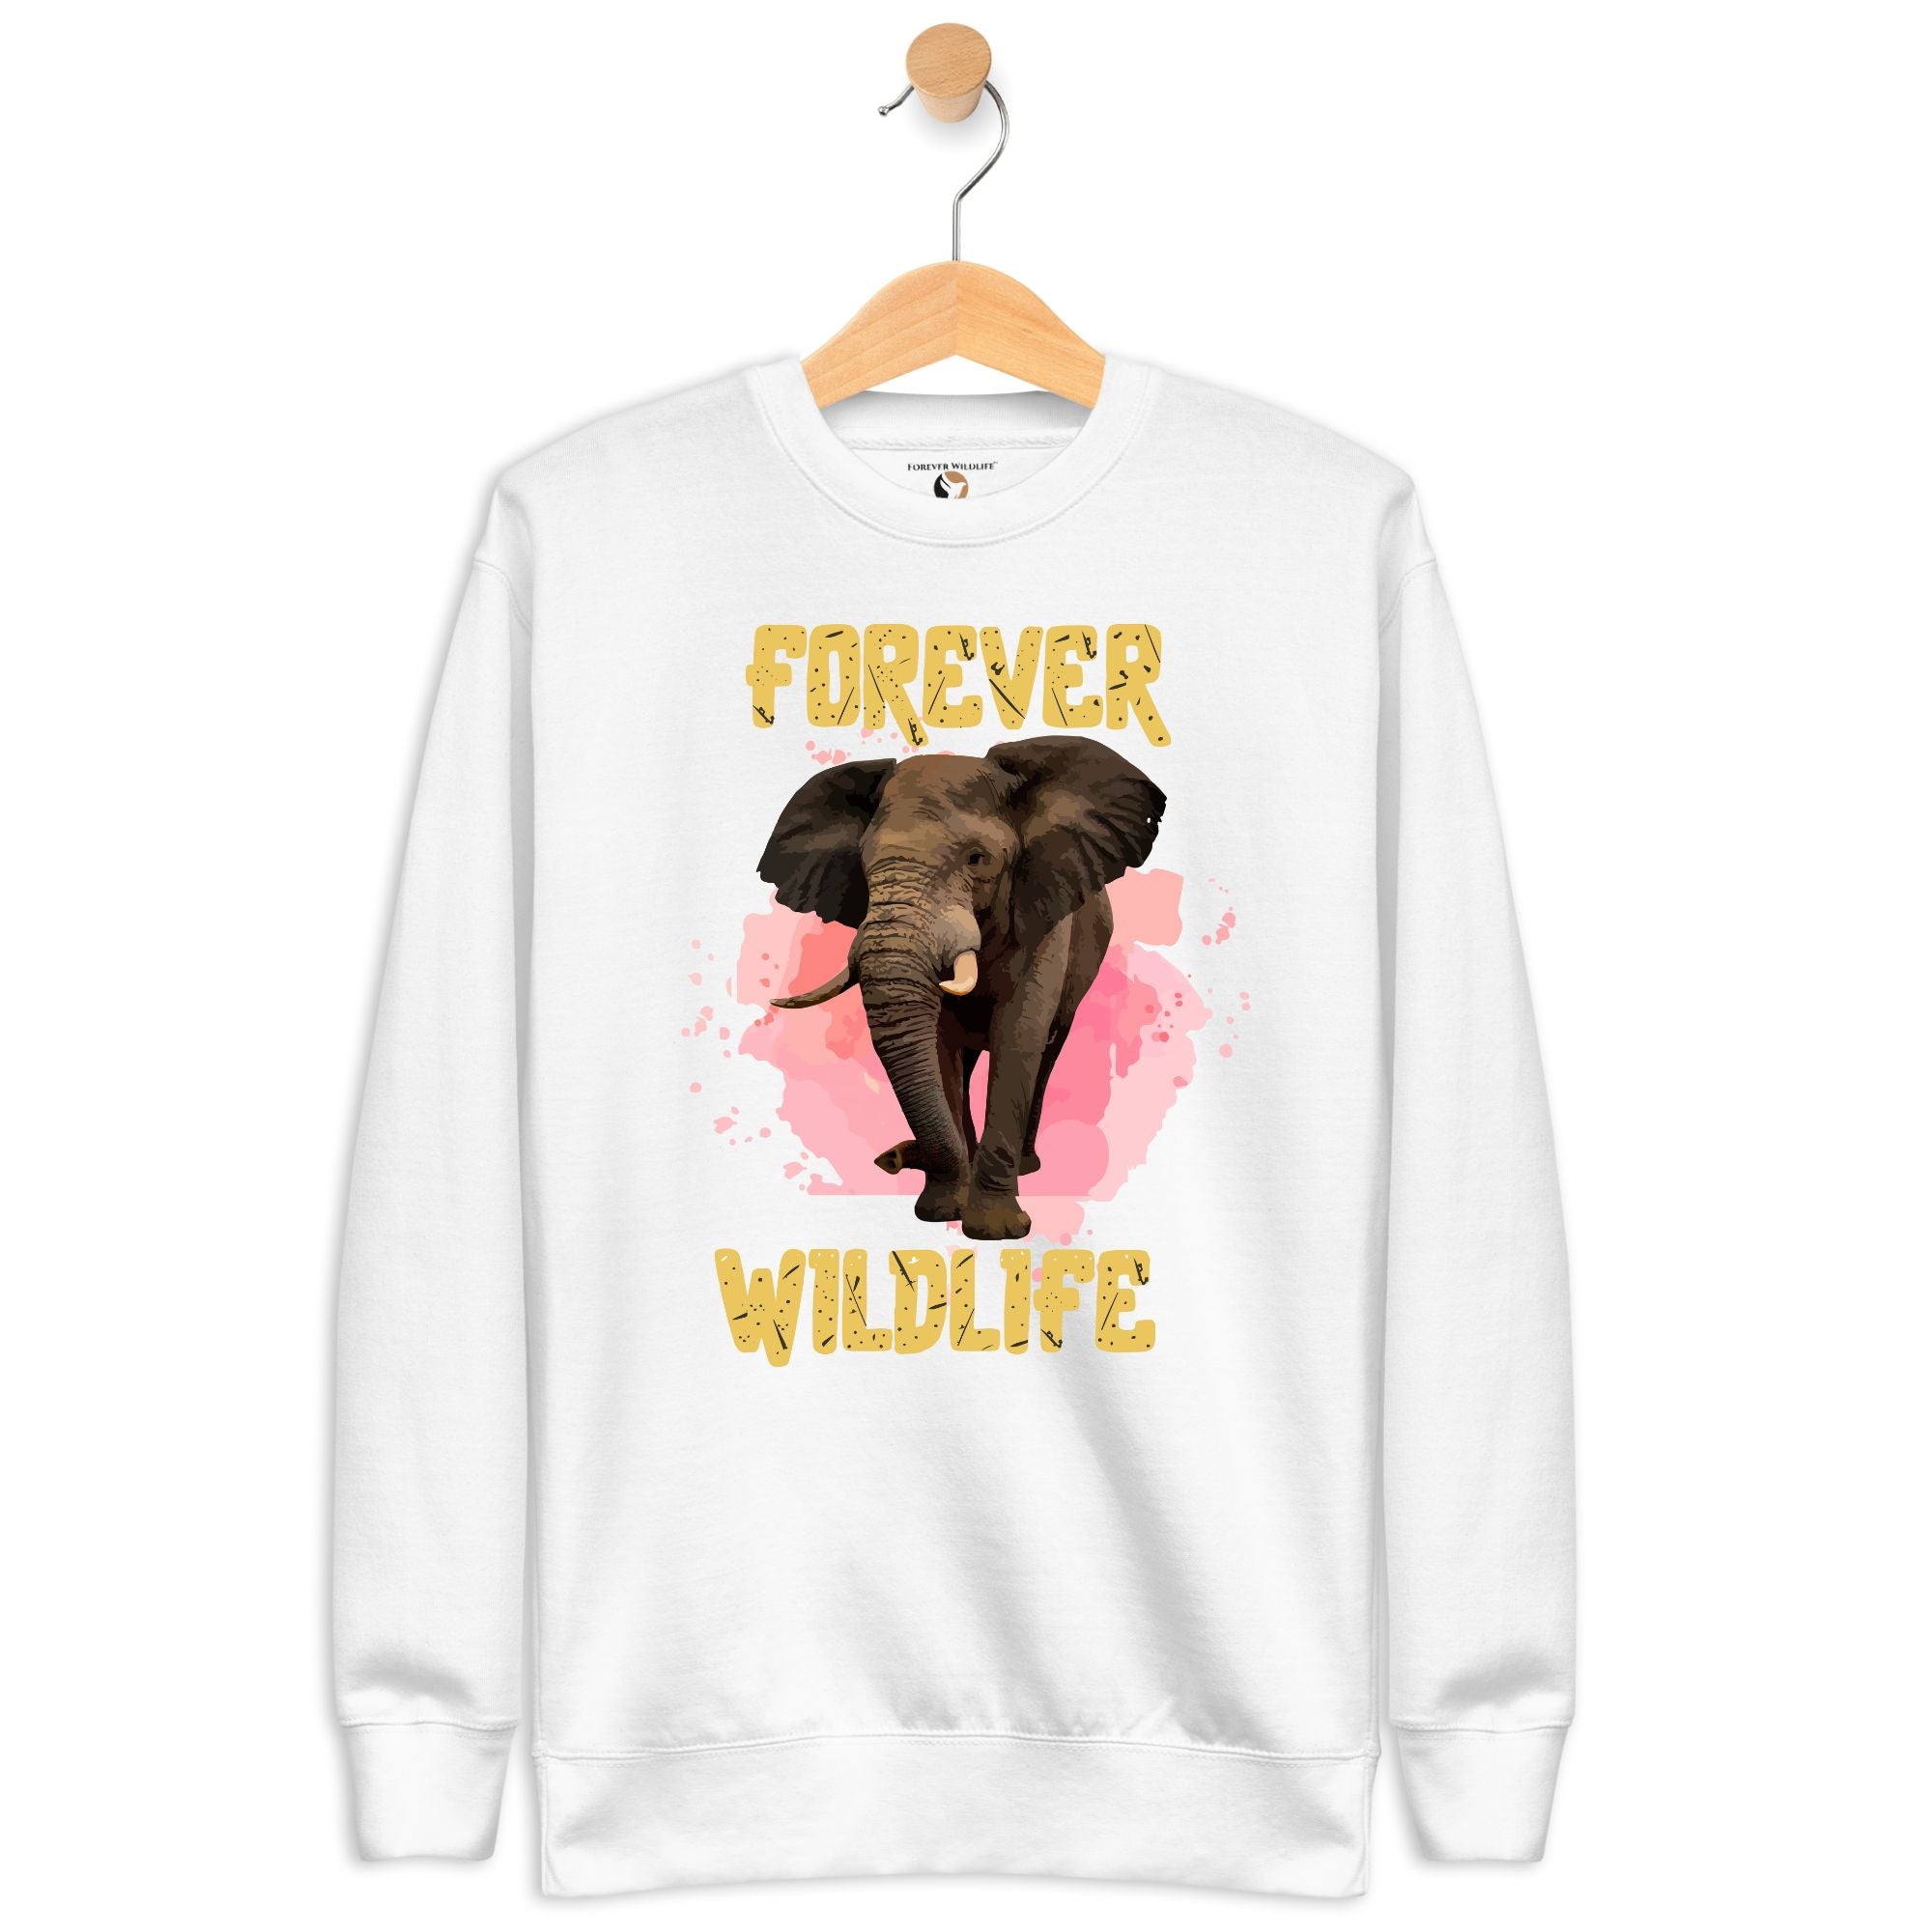 Elephant Sweatshirt in White-Premium Wildlife Animal Inspiration Sweatshirt Design, part of Wildlife Sweatshirts & Clothing from Forever Wildlife.